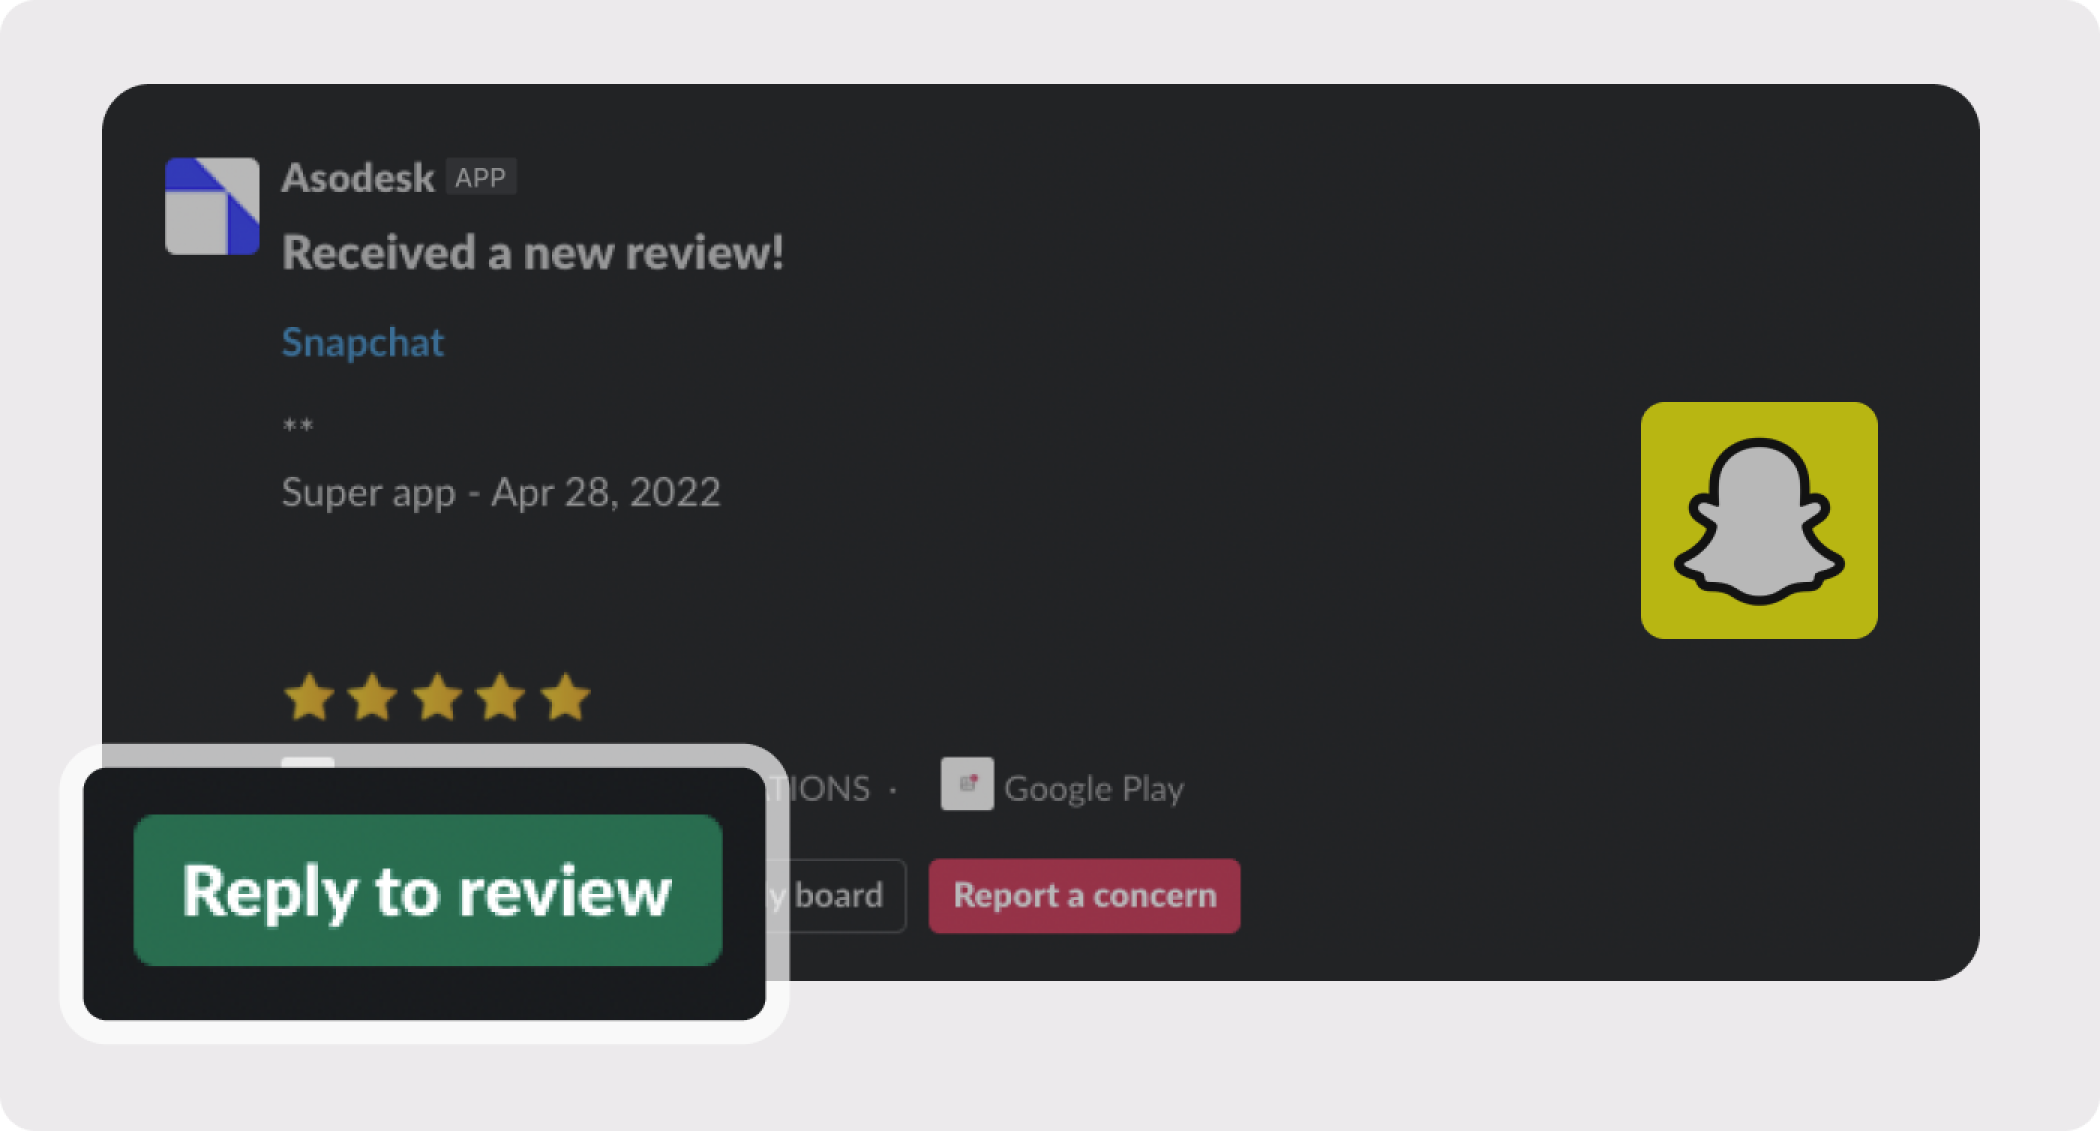 You can Reply to reviews through Slack